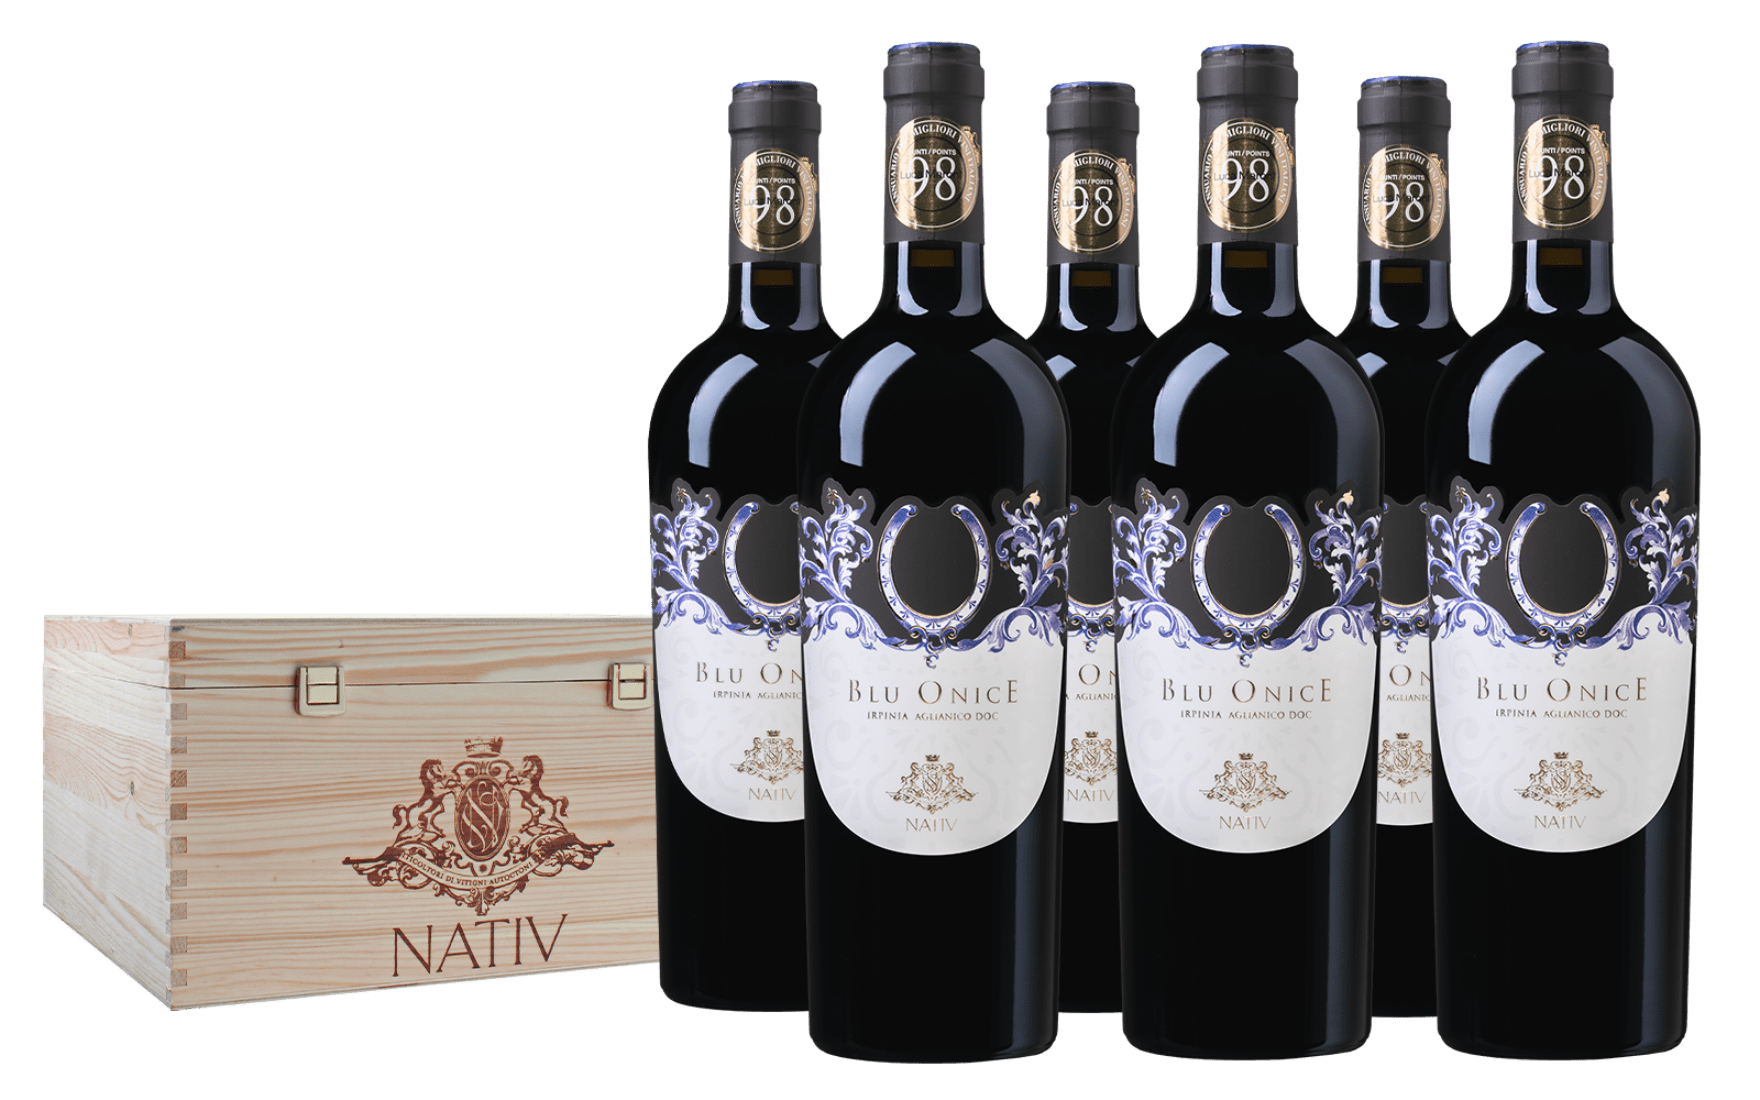 Nativ Blu Onice 2019 Doc Irpinia Aglianico 6 bottiglie - Nativ